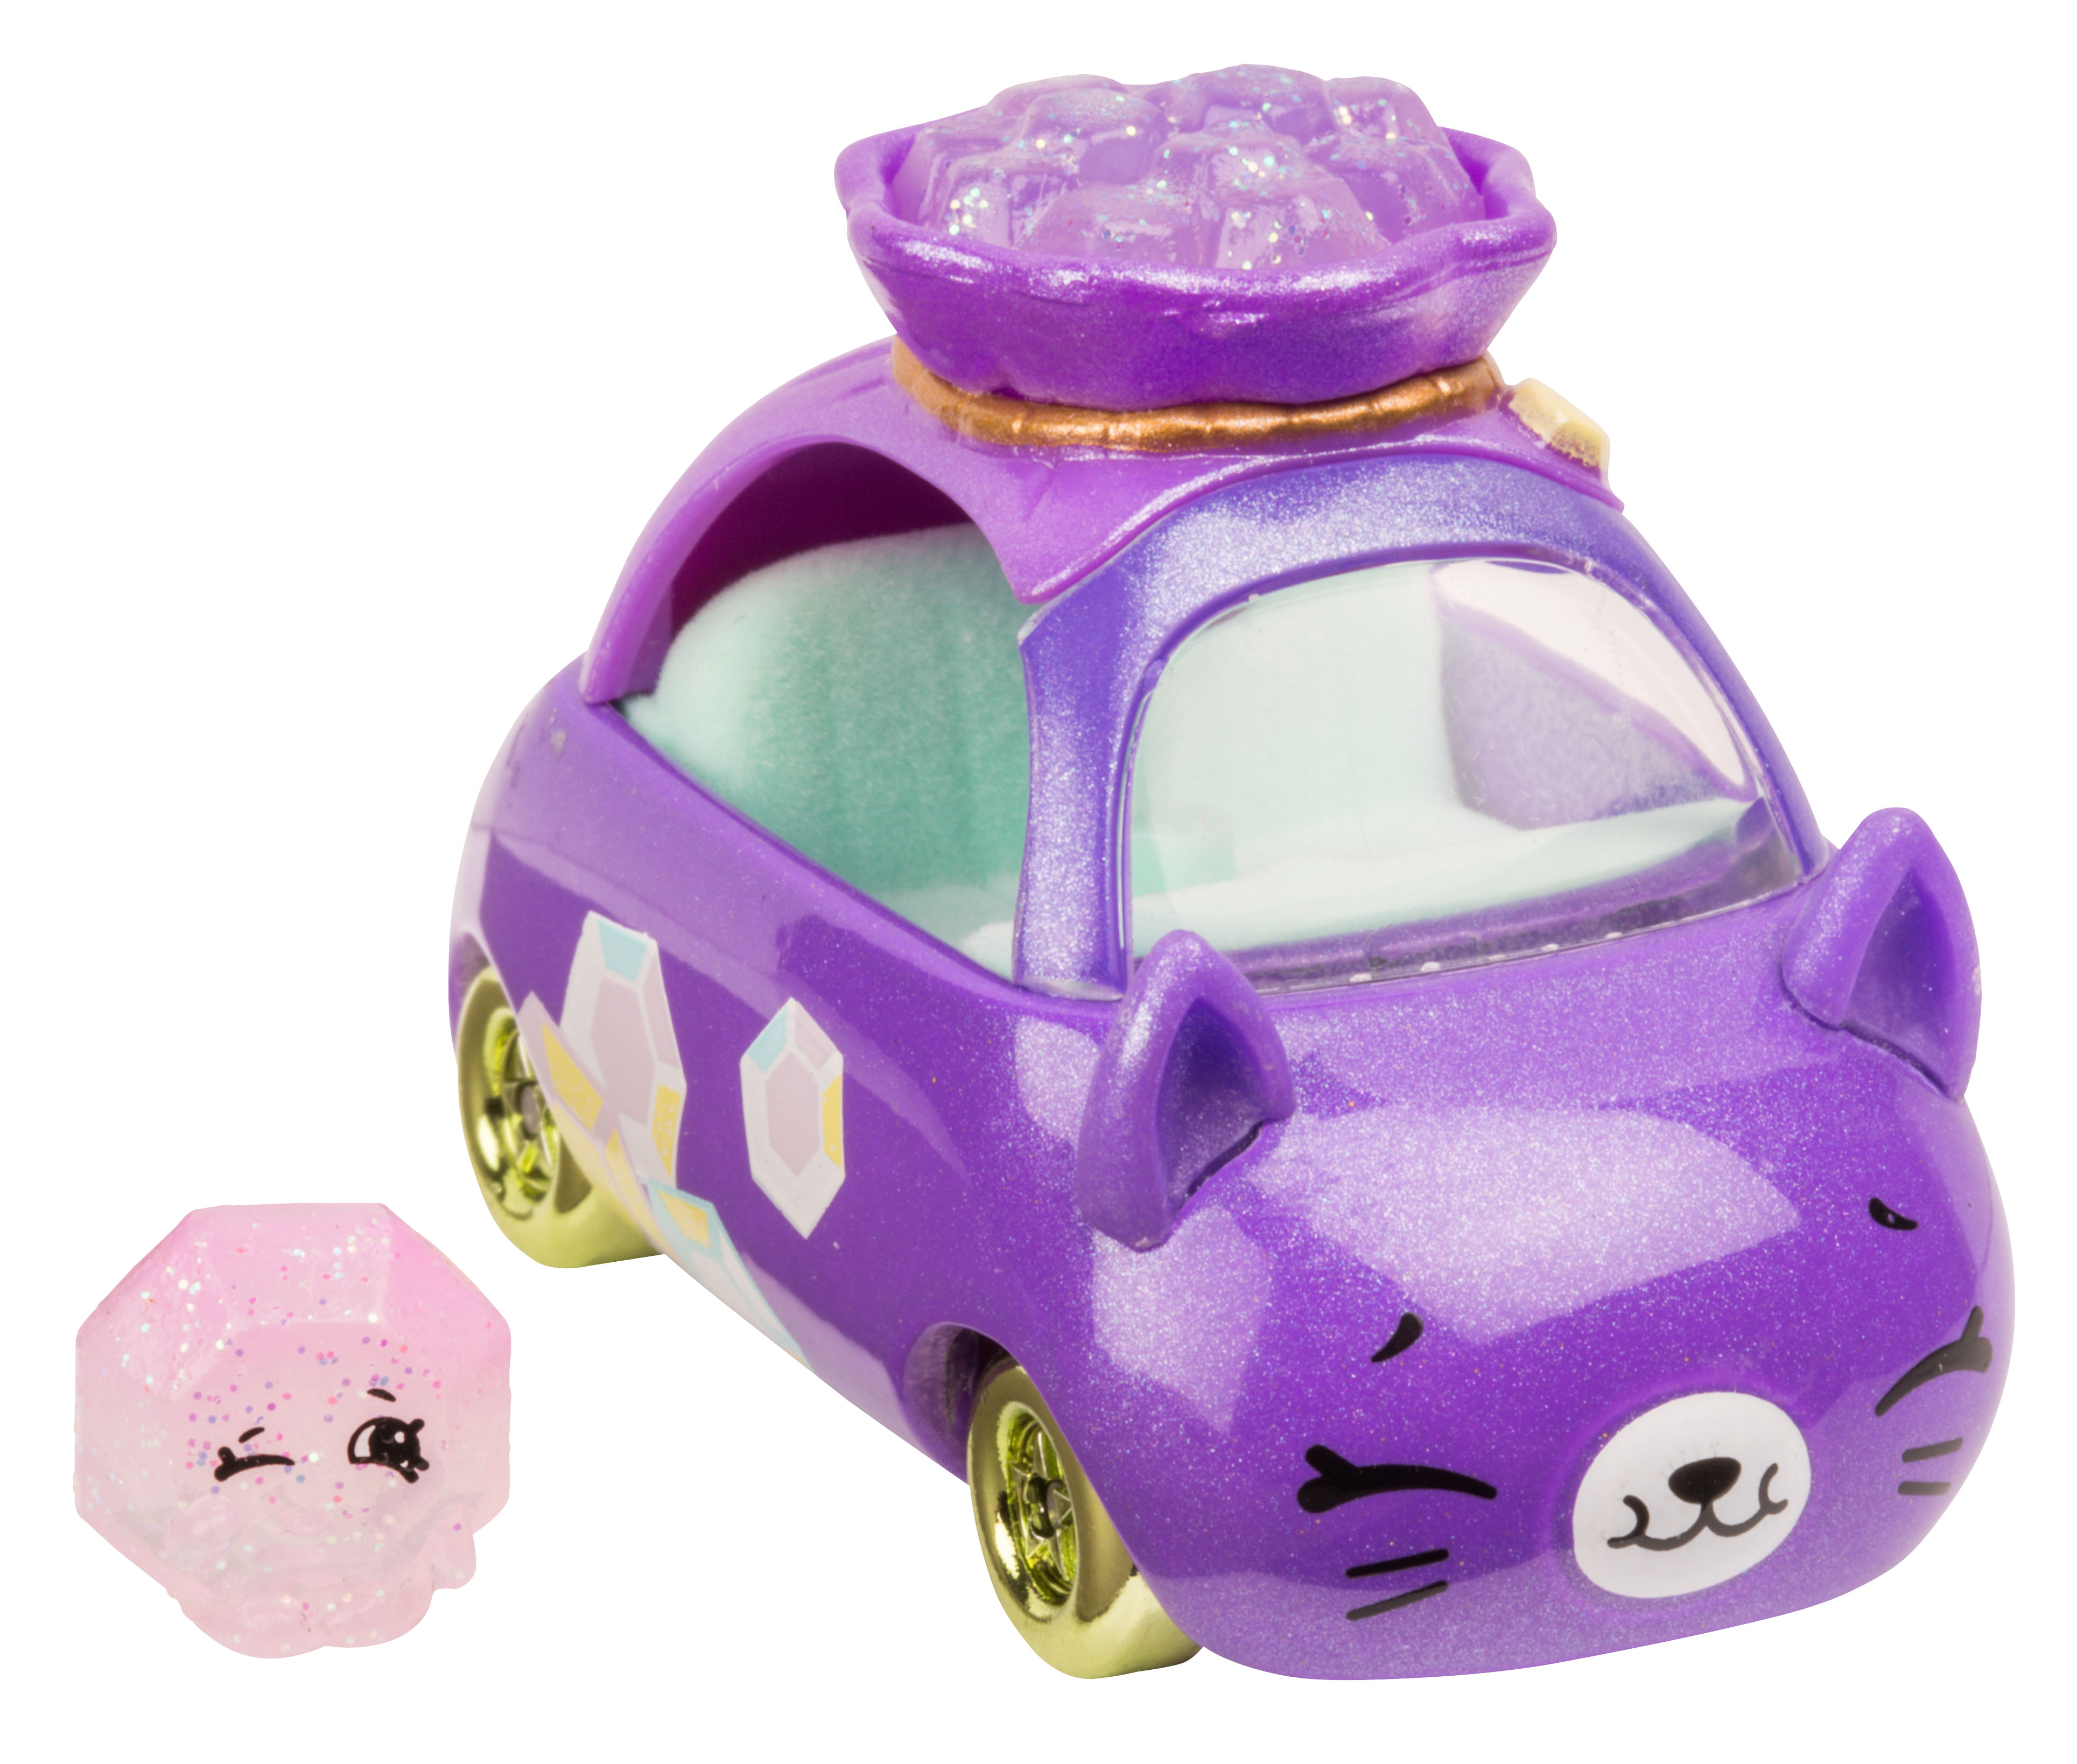 Cutie Cars Shopkins Season 2 Single Pack, Limited Edition Rollin Gemstones